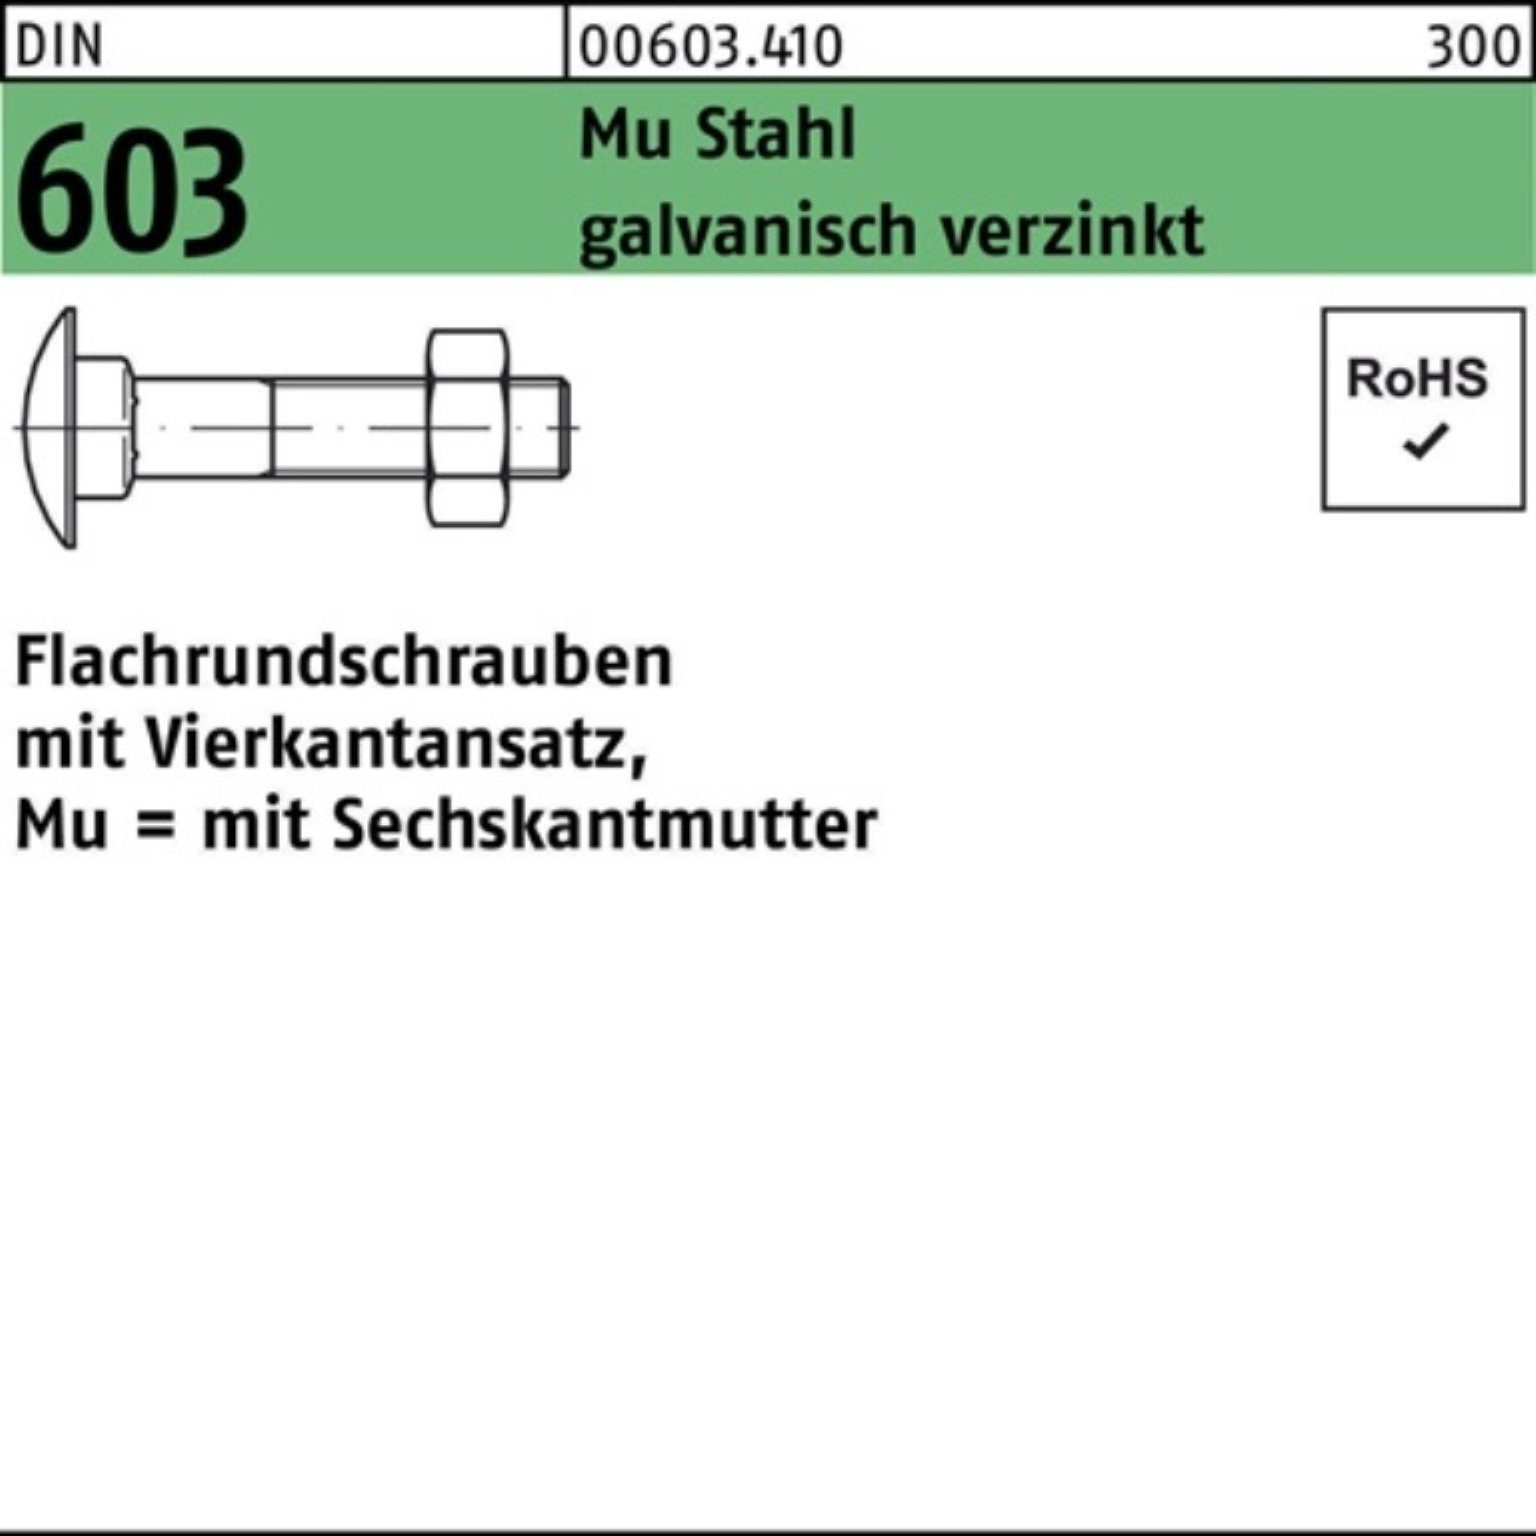 Flachrundschraube Pack 603 Schraube Vierkantansatz/6-ktmutter M12x30 Reyher DIN 100er